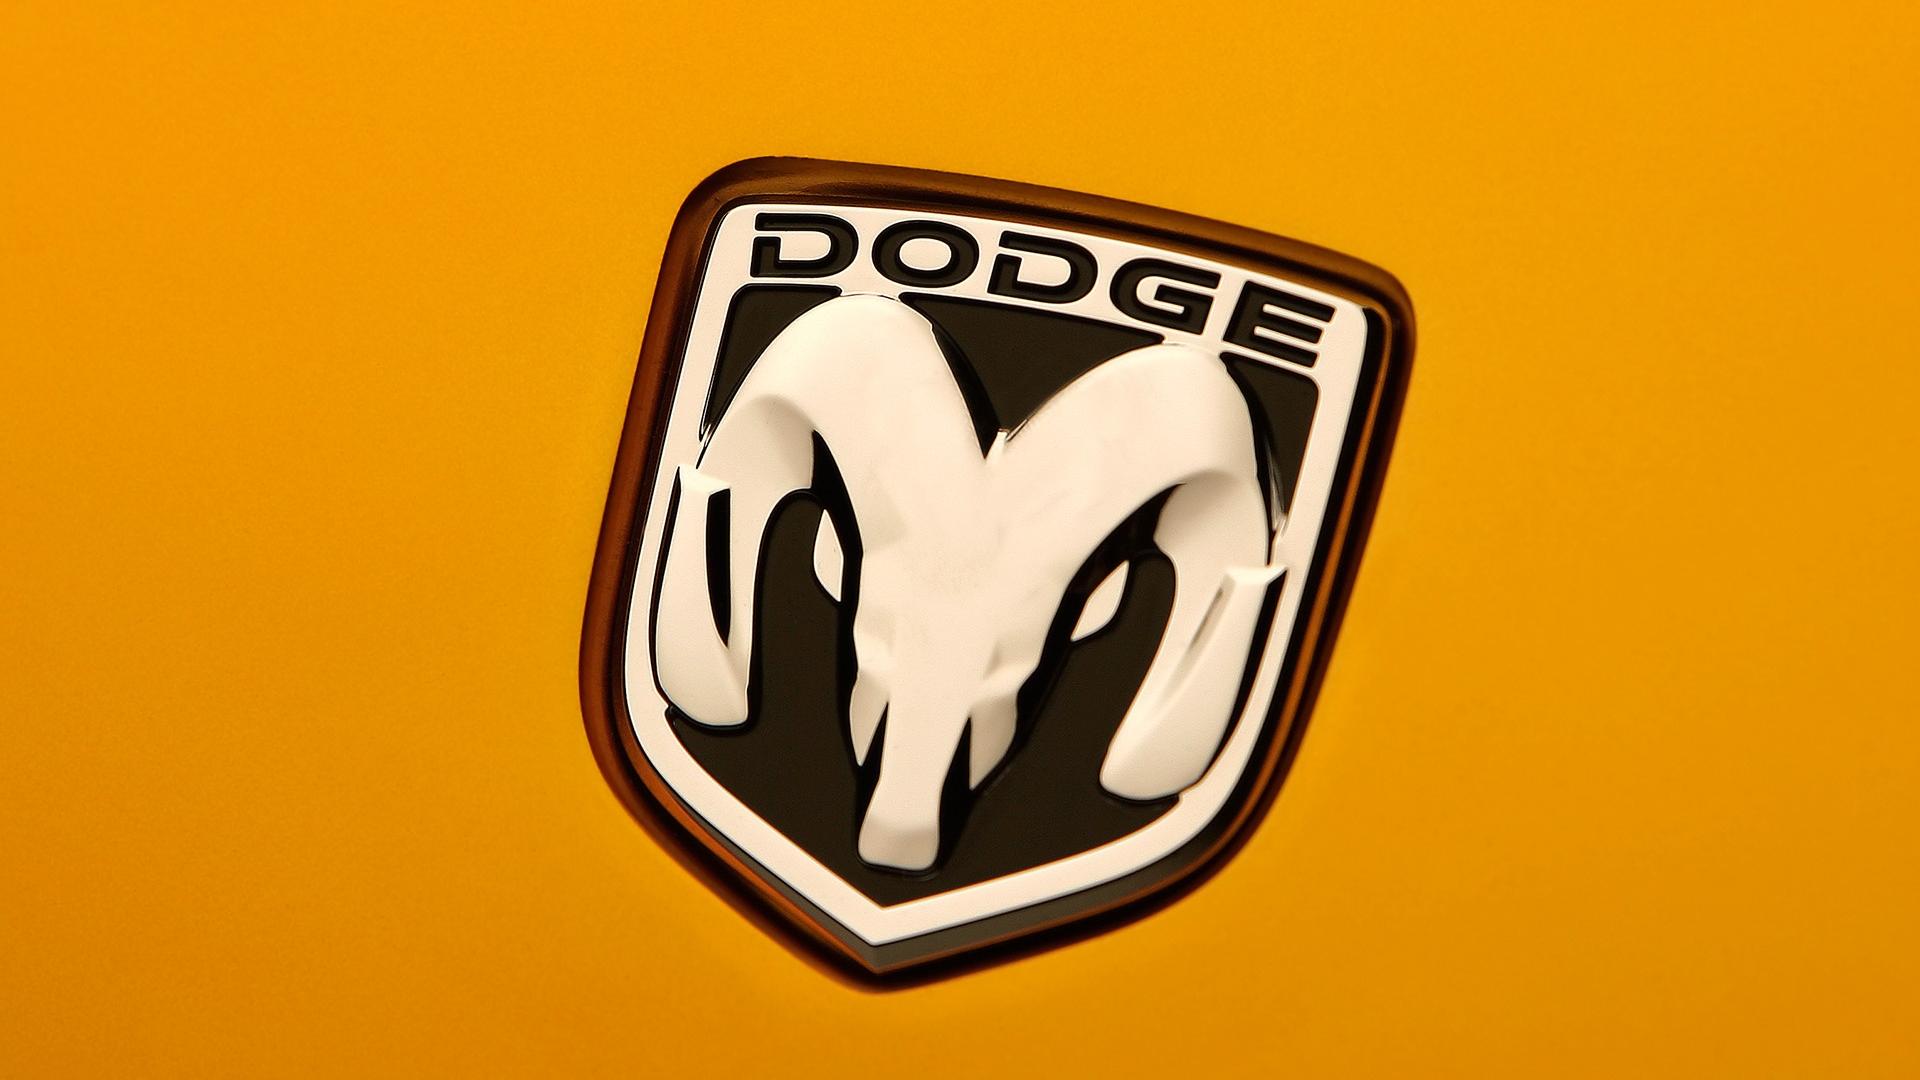 2007 Dodge Demon Roadster Concept Emblem 1920x1080